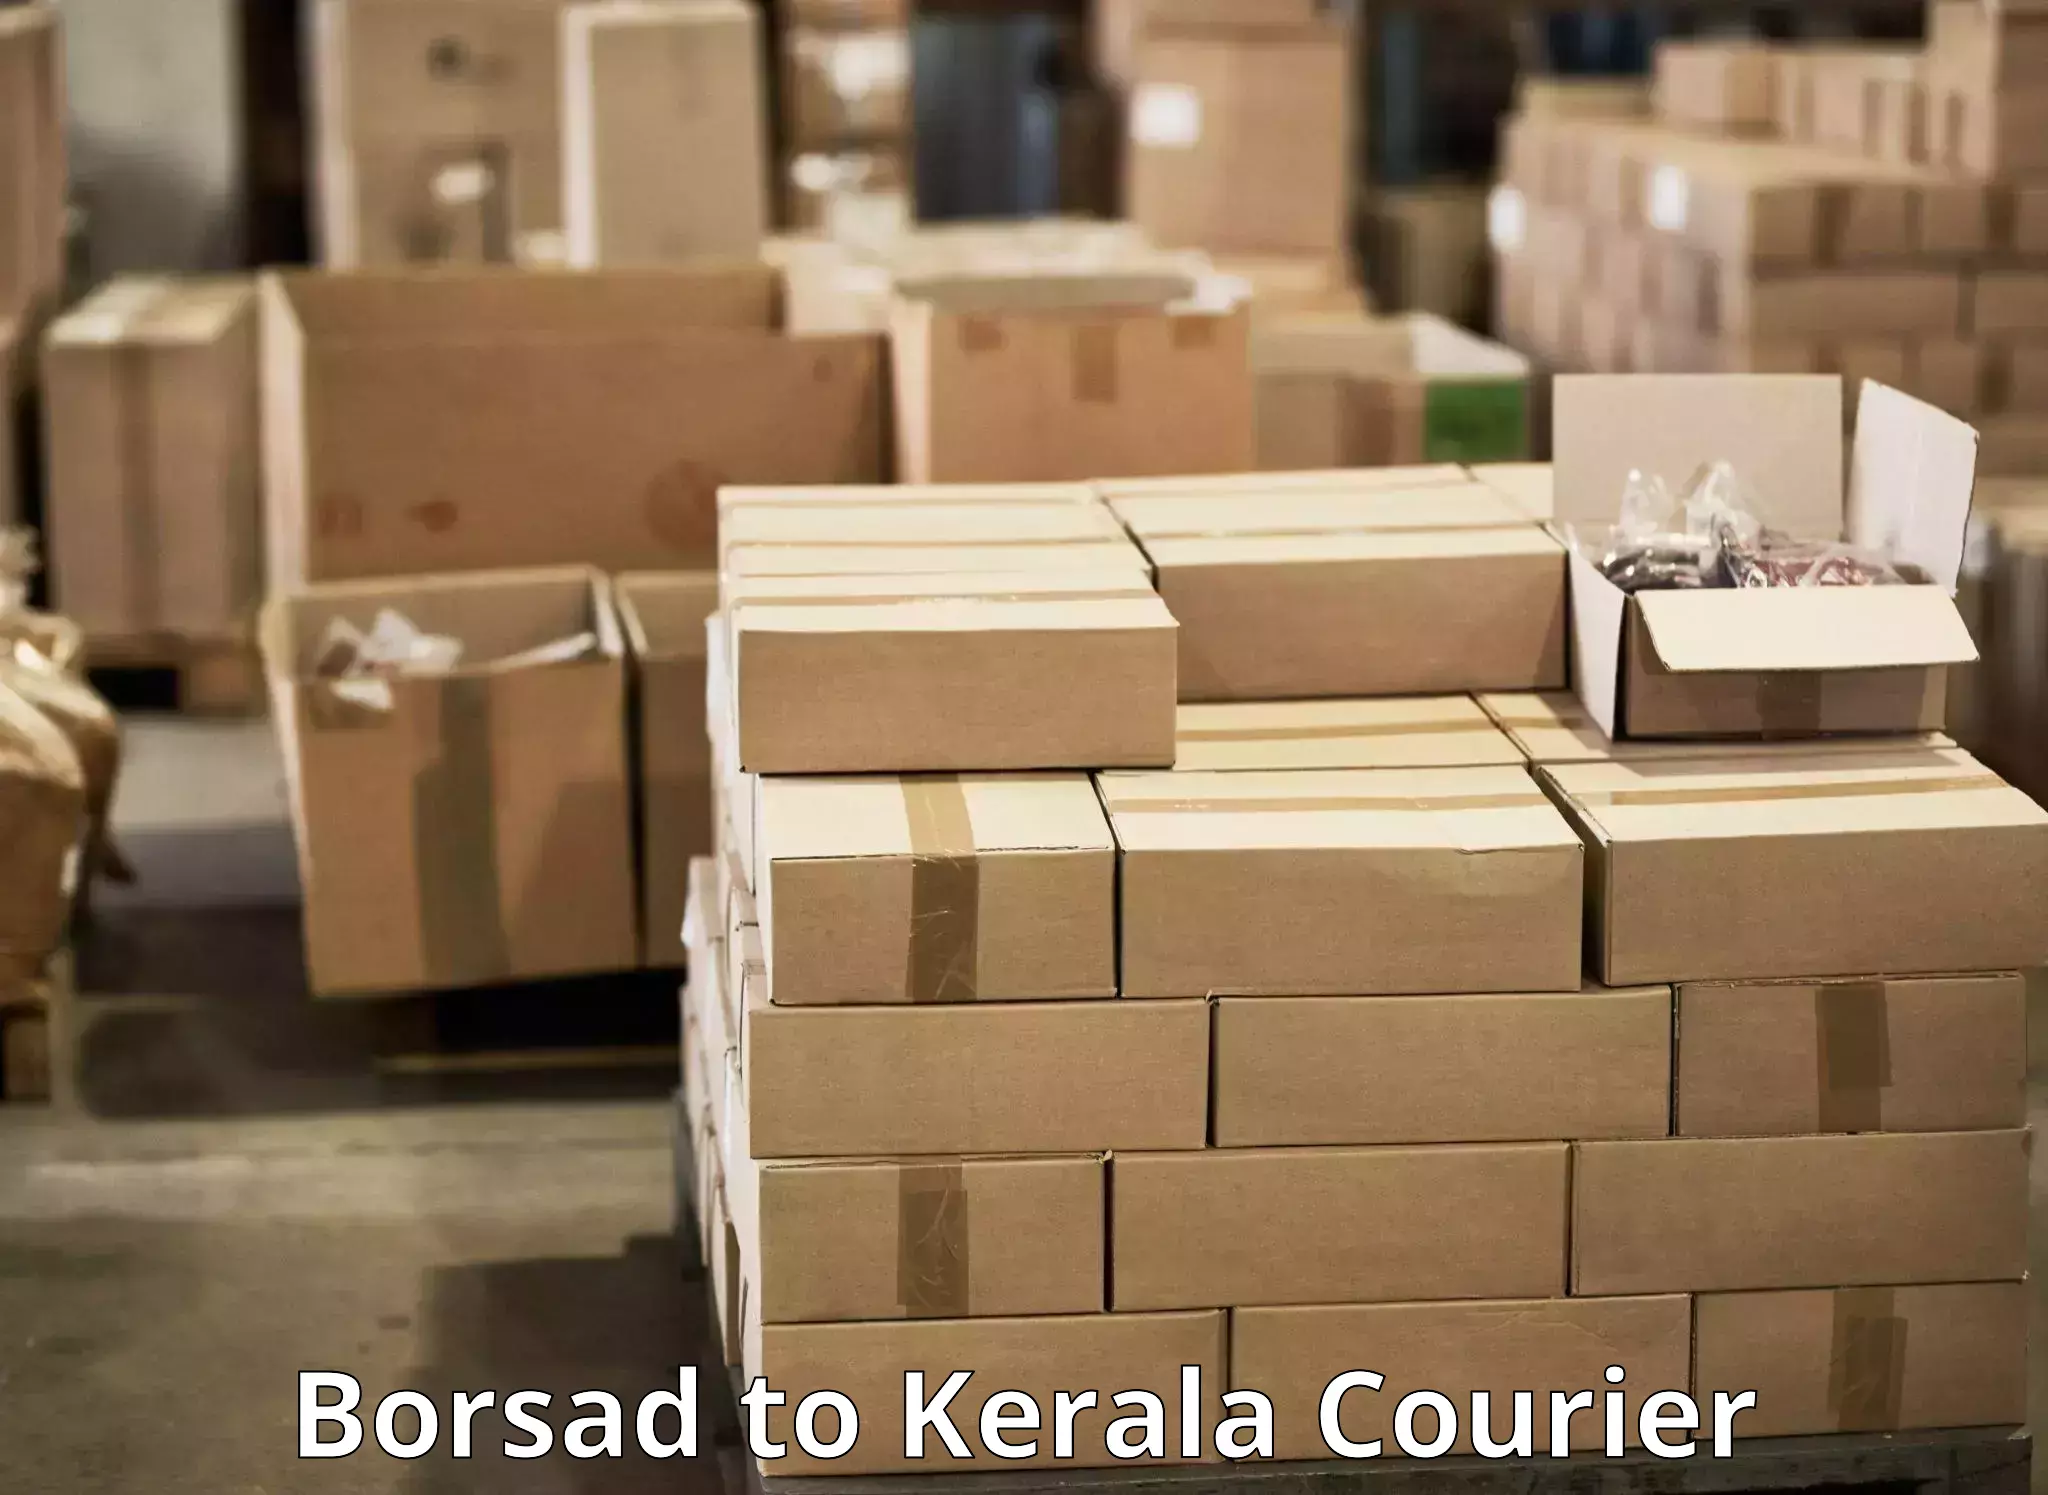 Courier service partnerships Borsad to Cochin Port Kochi